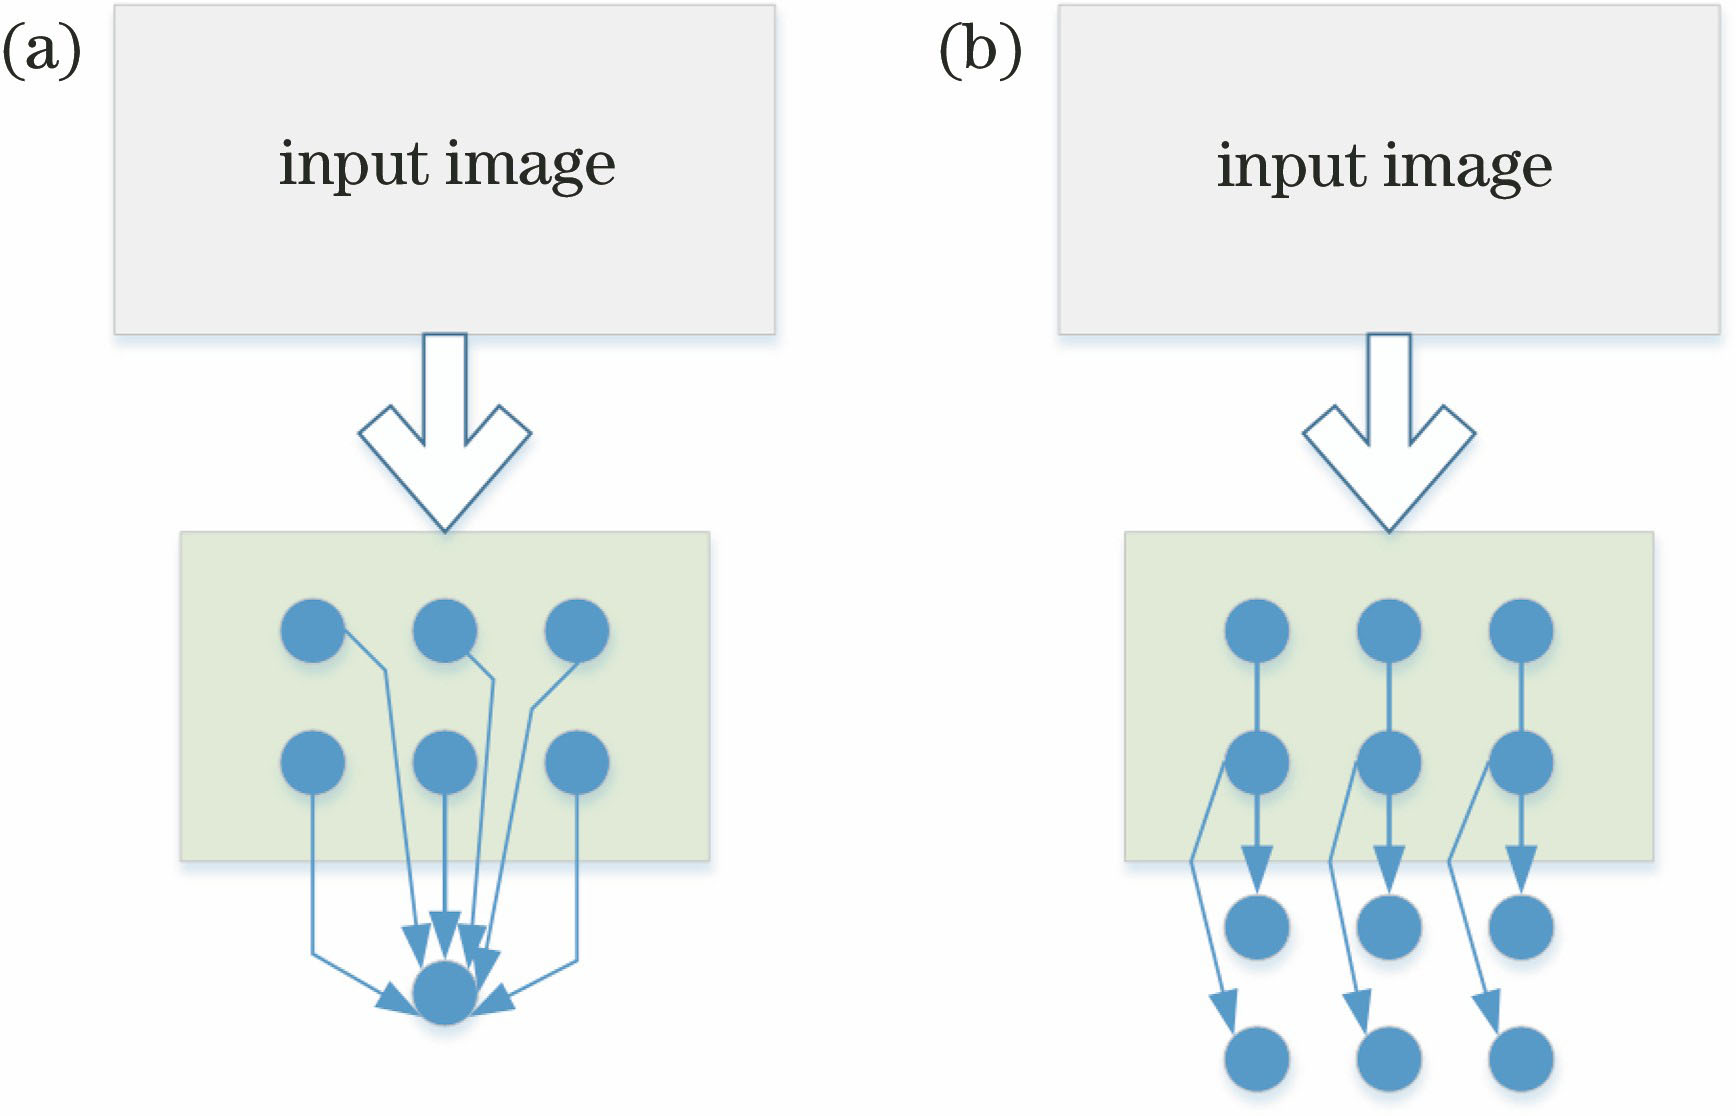 Different network models. (a) Classification model; (b) segmentation model